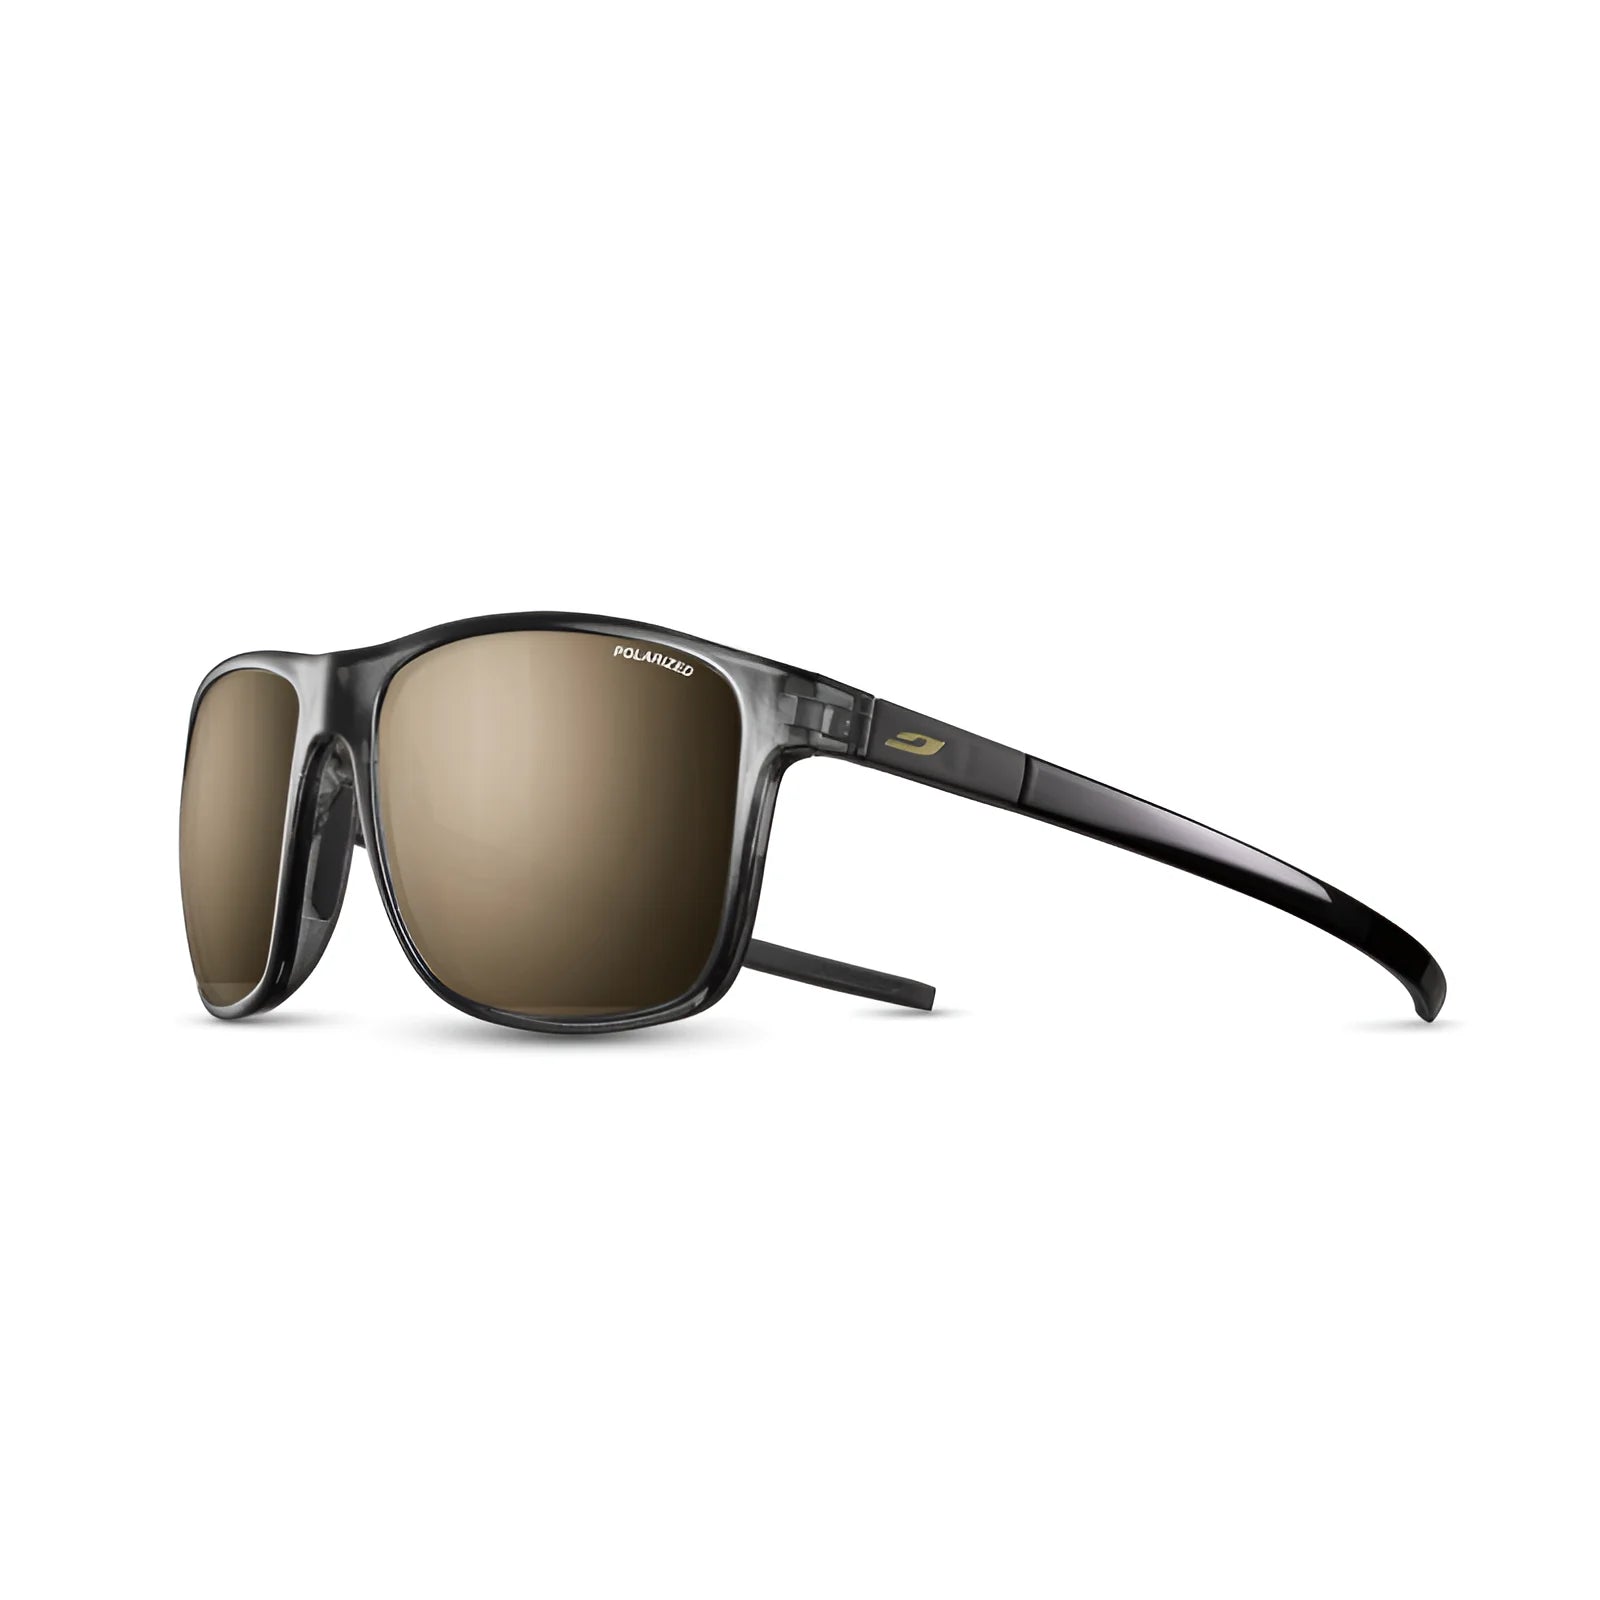 Julbo The Streets Sunglasses Translucent Black / Black / Spectron 3 Polarized (VLT 12%)